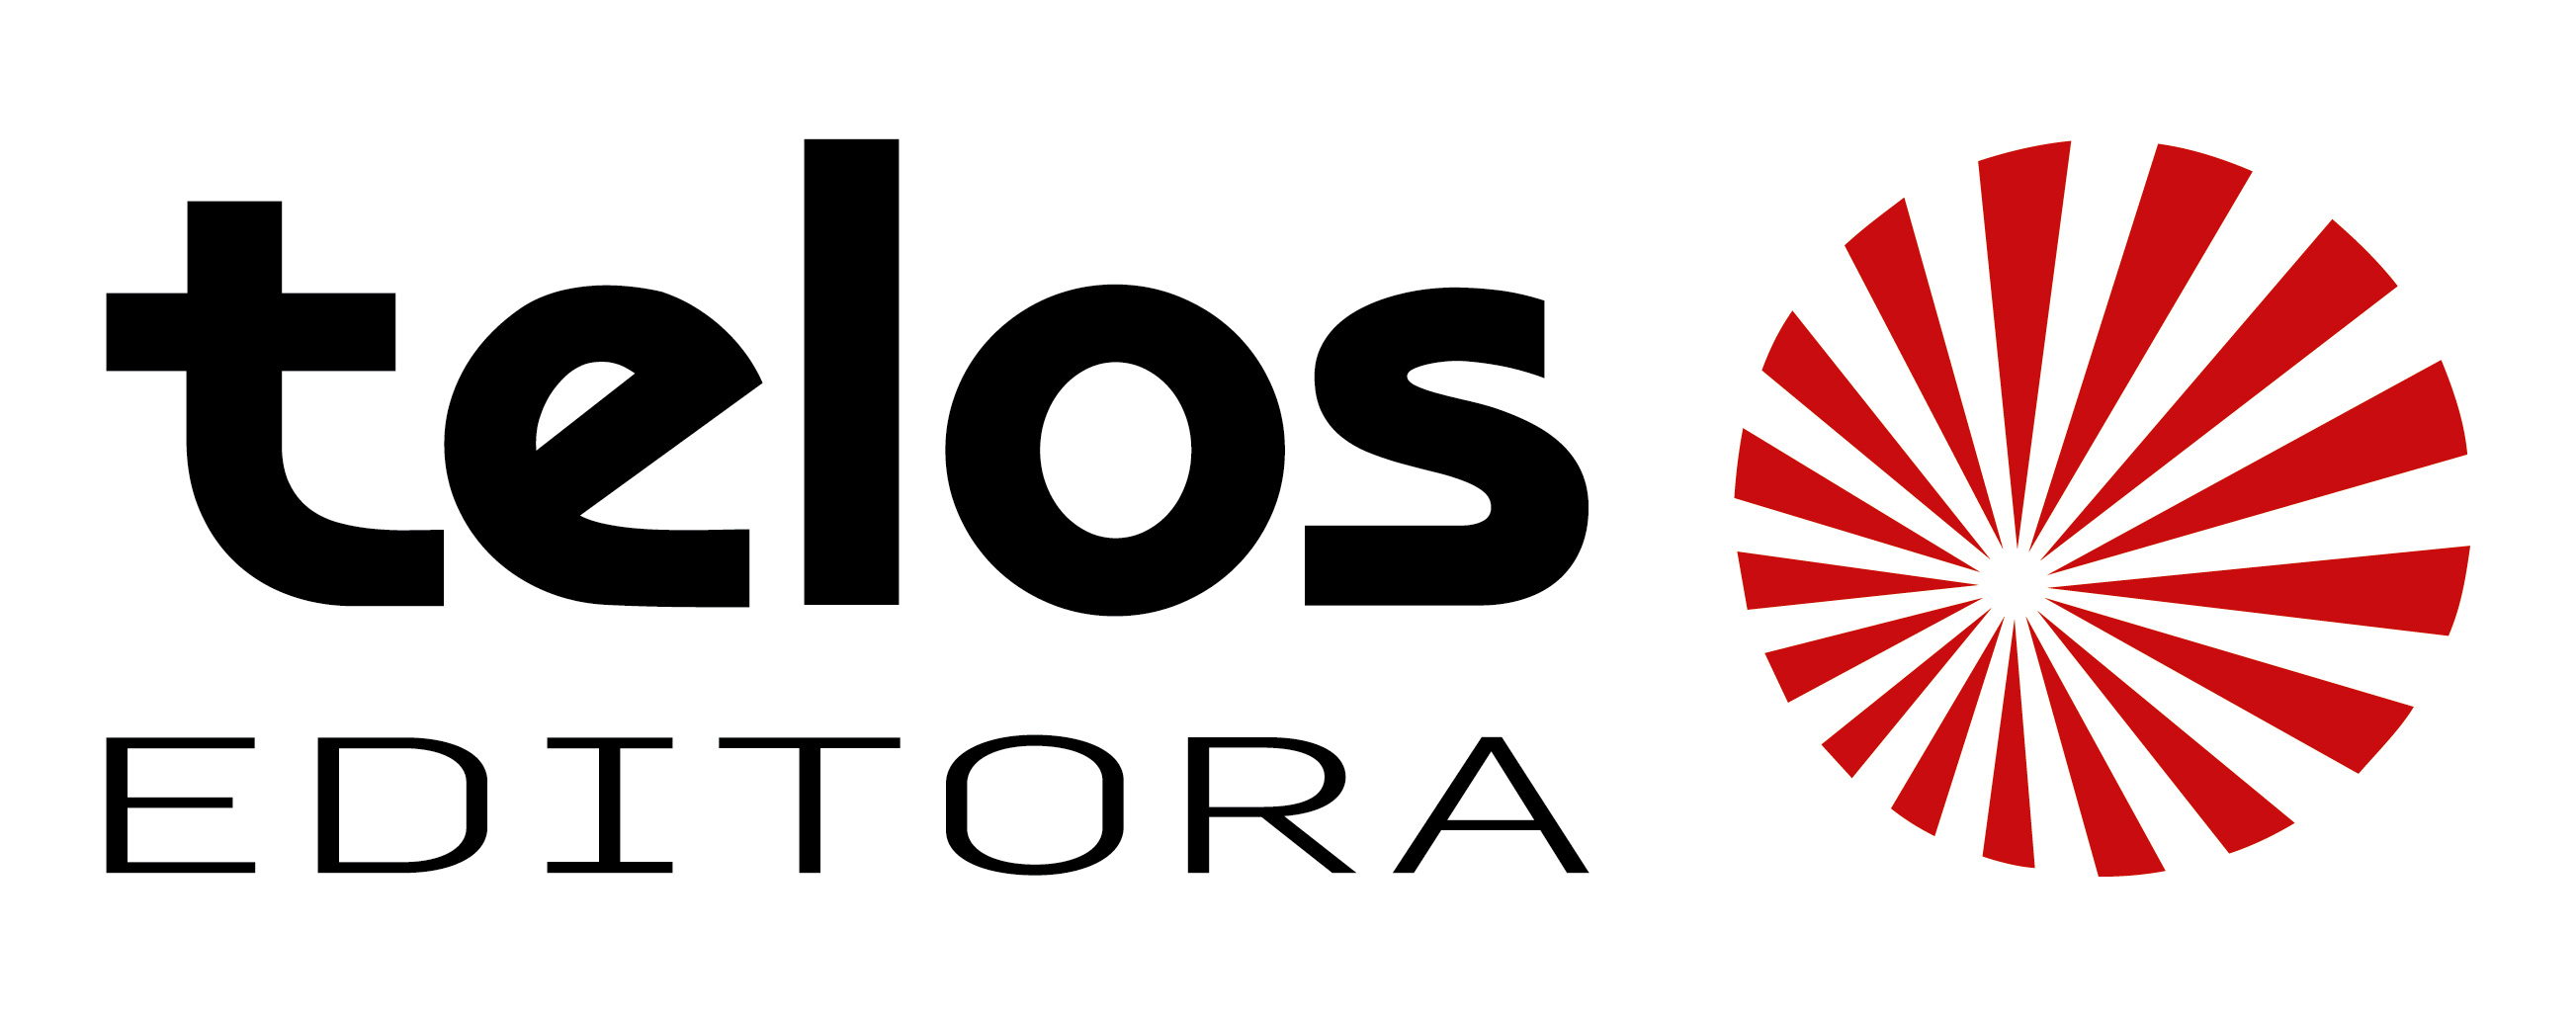 Logo Telos